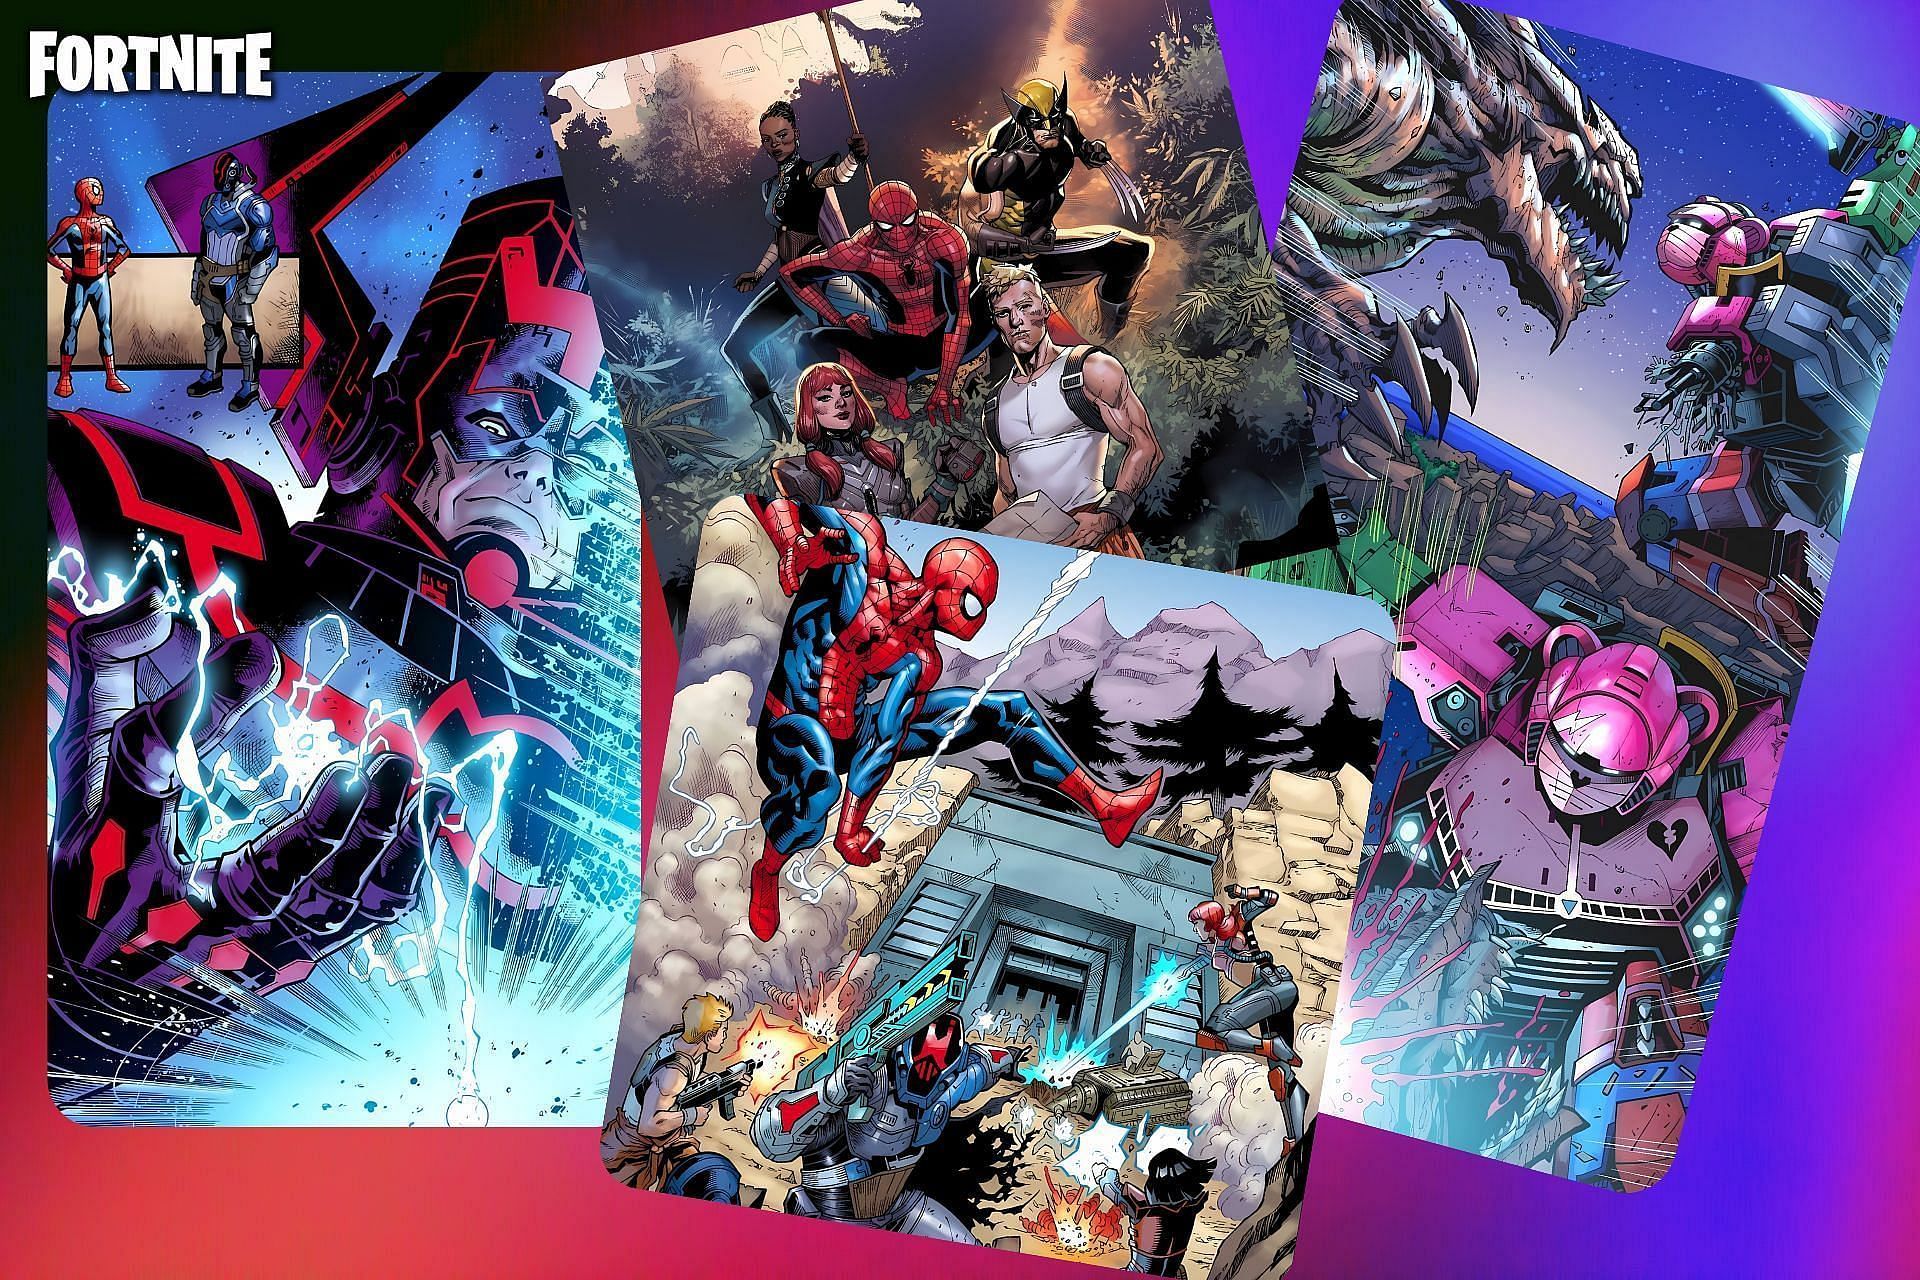 Spider-Man Zero Outfit Epic Games Key Global (Fortnite x Marvel: Zero War  #1)